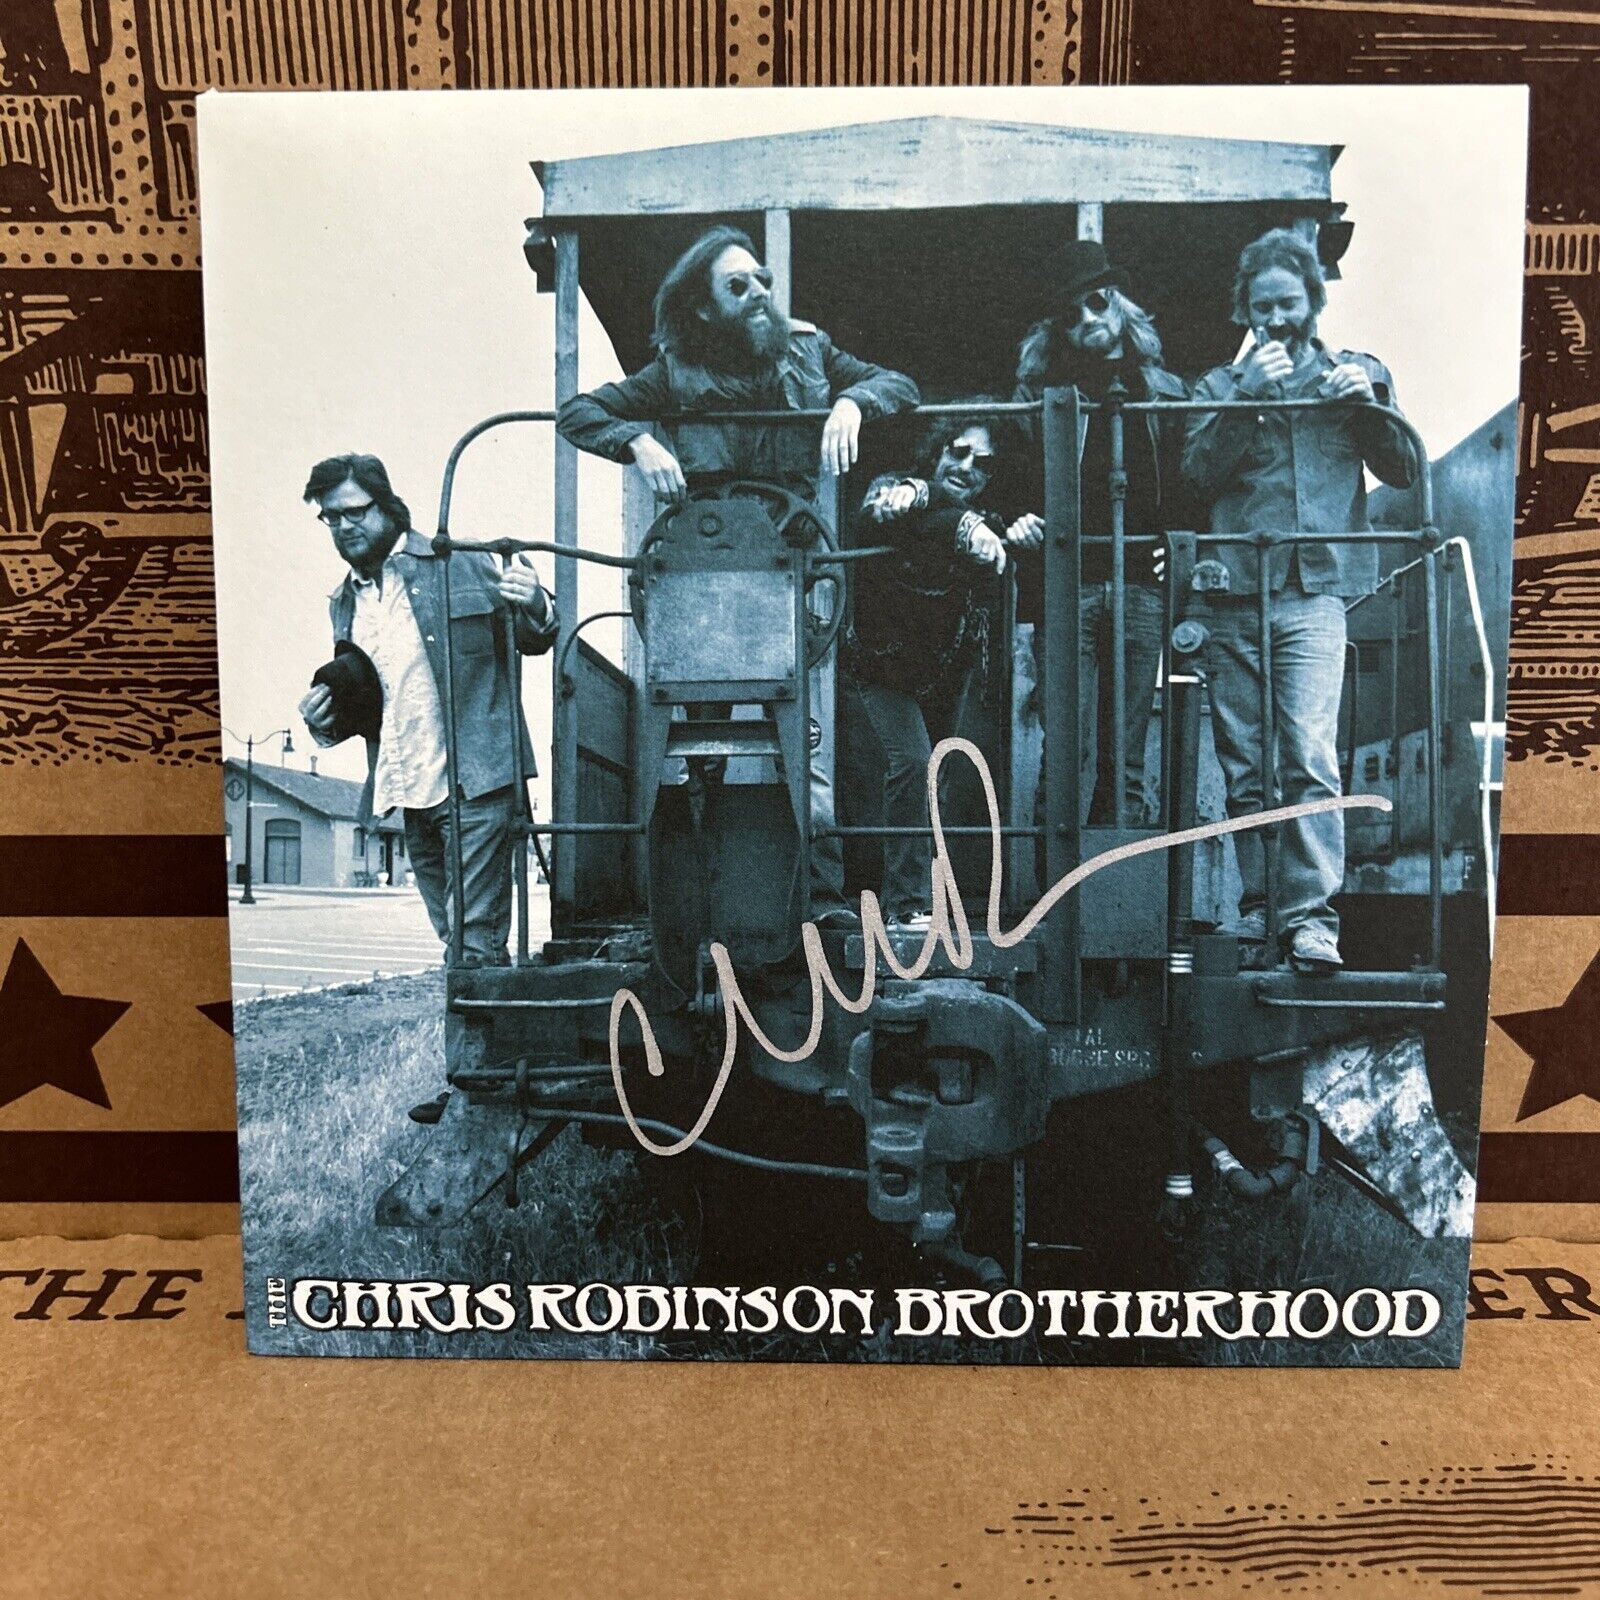 AUTOGRAPHED Signed 2012 The Chris Robinson Brotherhood 7 inch Single Blue Vinyl